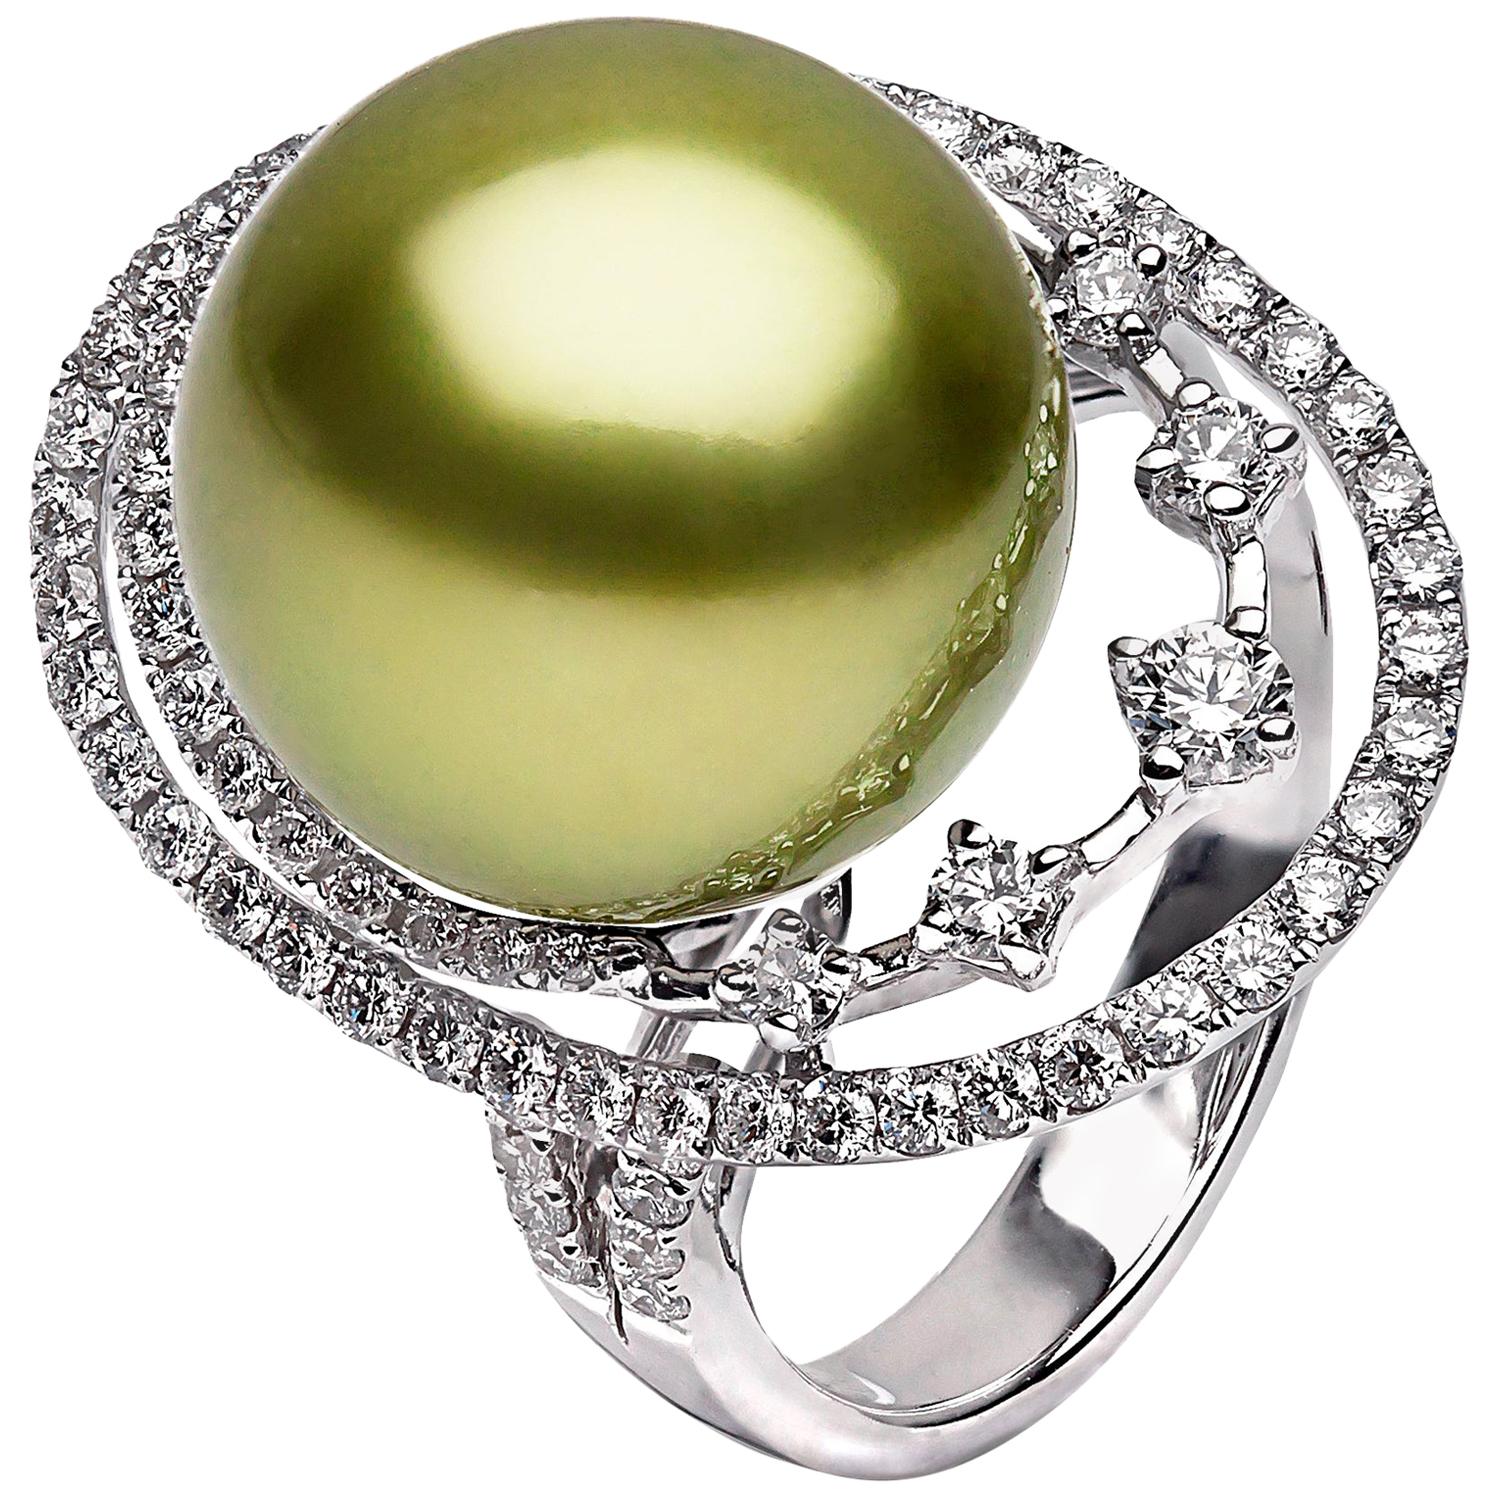 Yoko London Pistachio-Colored Tahitian Pearl and Diamond Ring in 18K White Gold